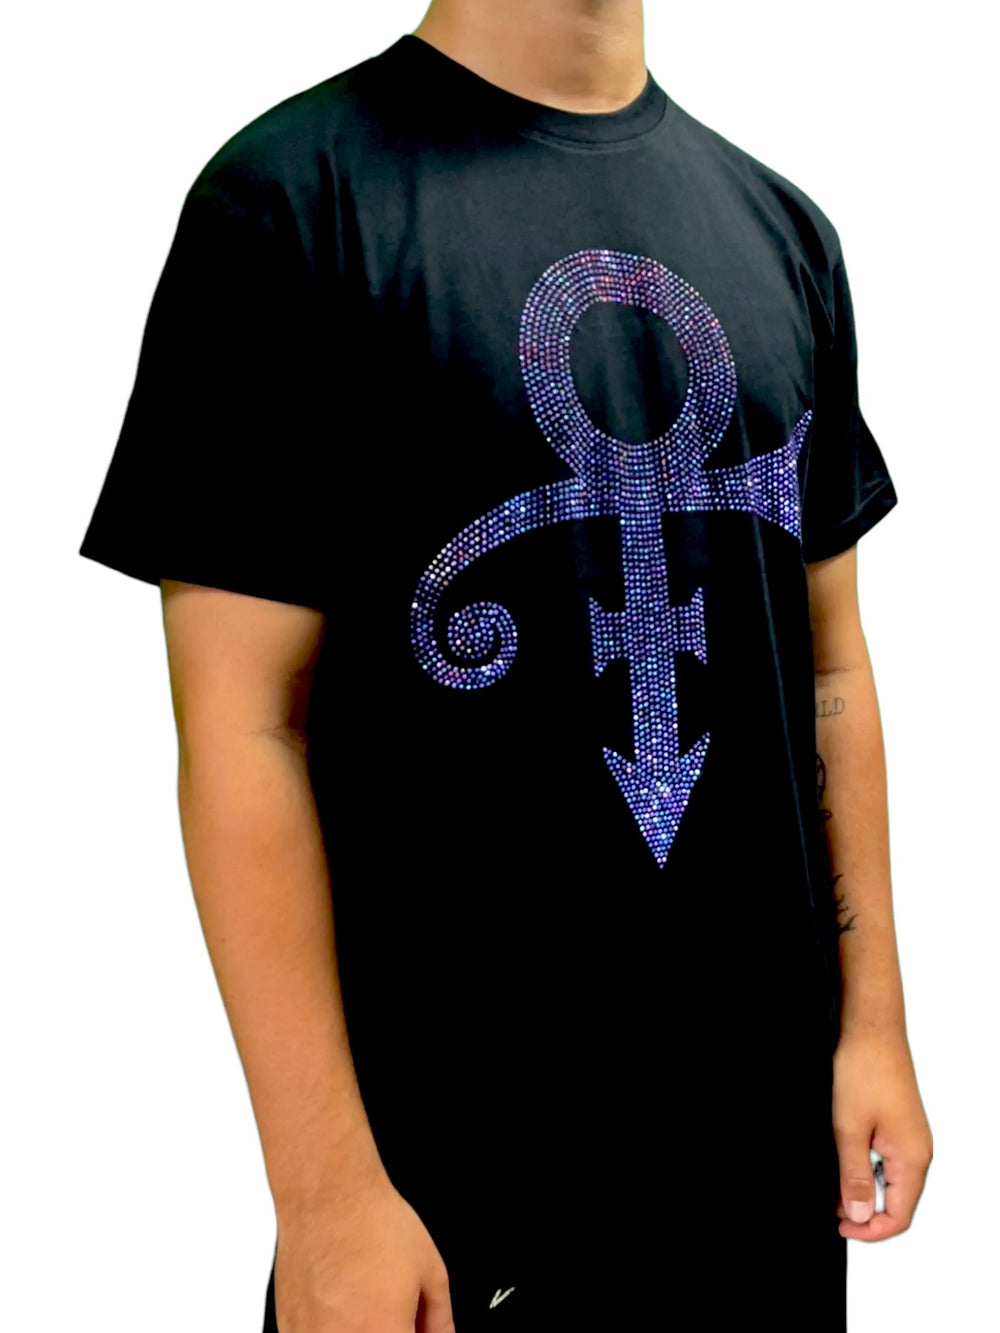 Prince – PURPLE Love Symbol Diamante Official Unisex T-Shirt Various Sizes NEW